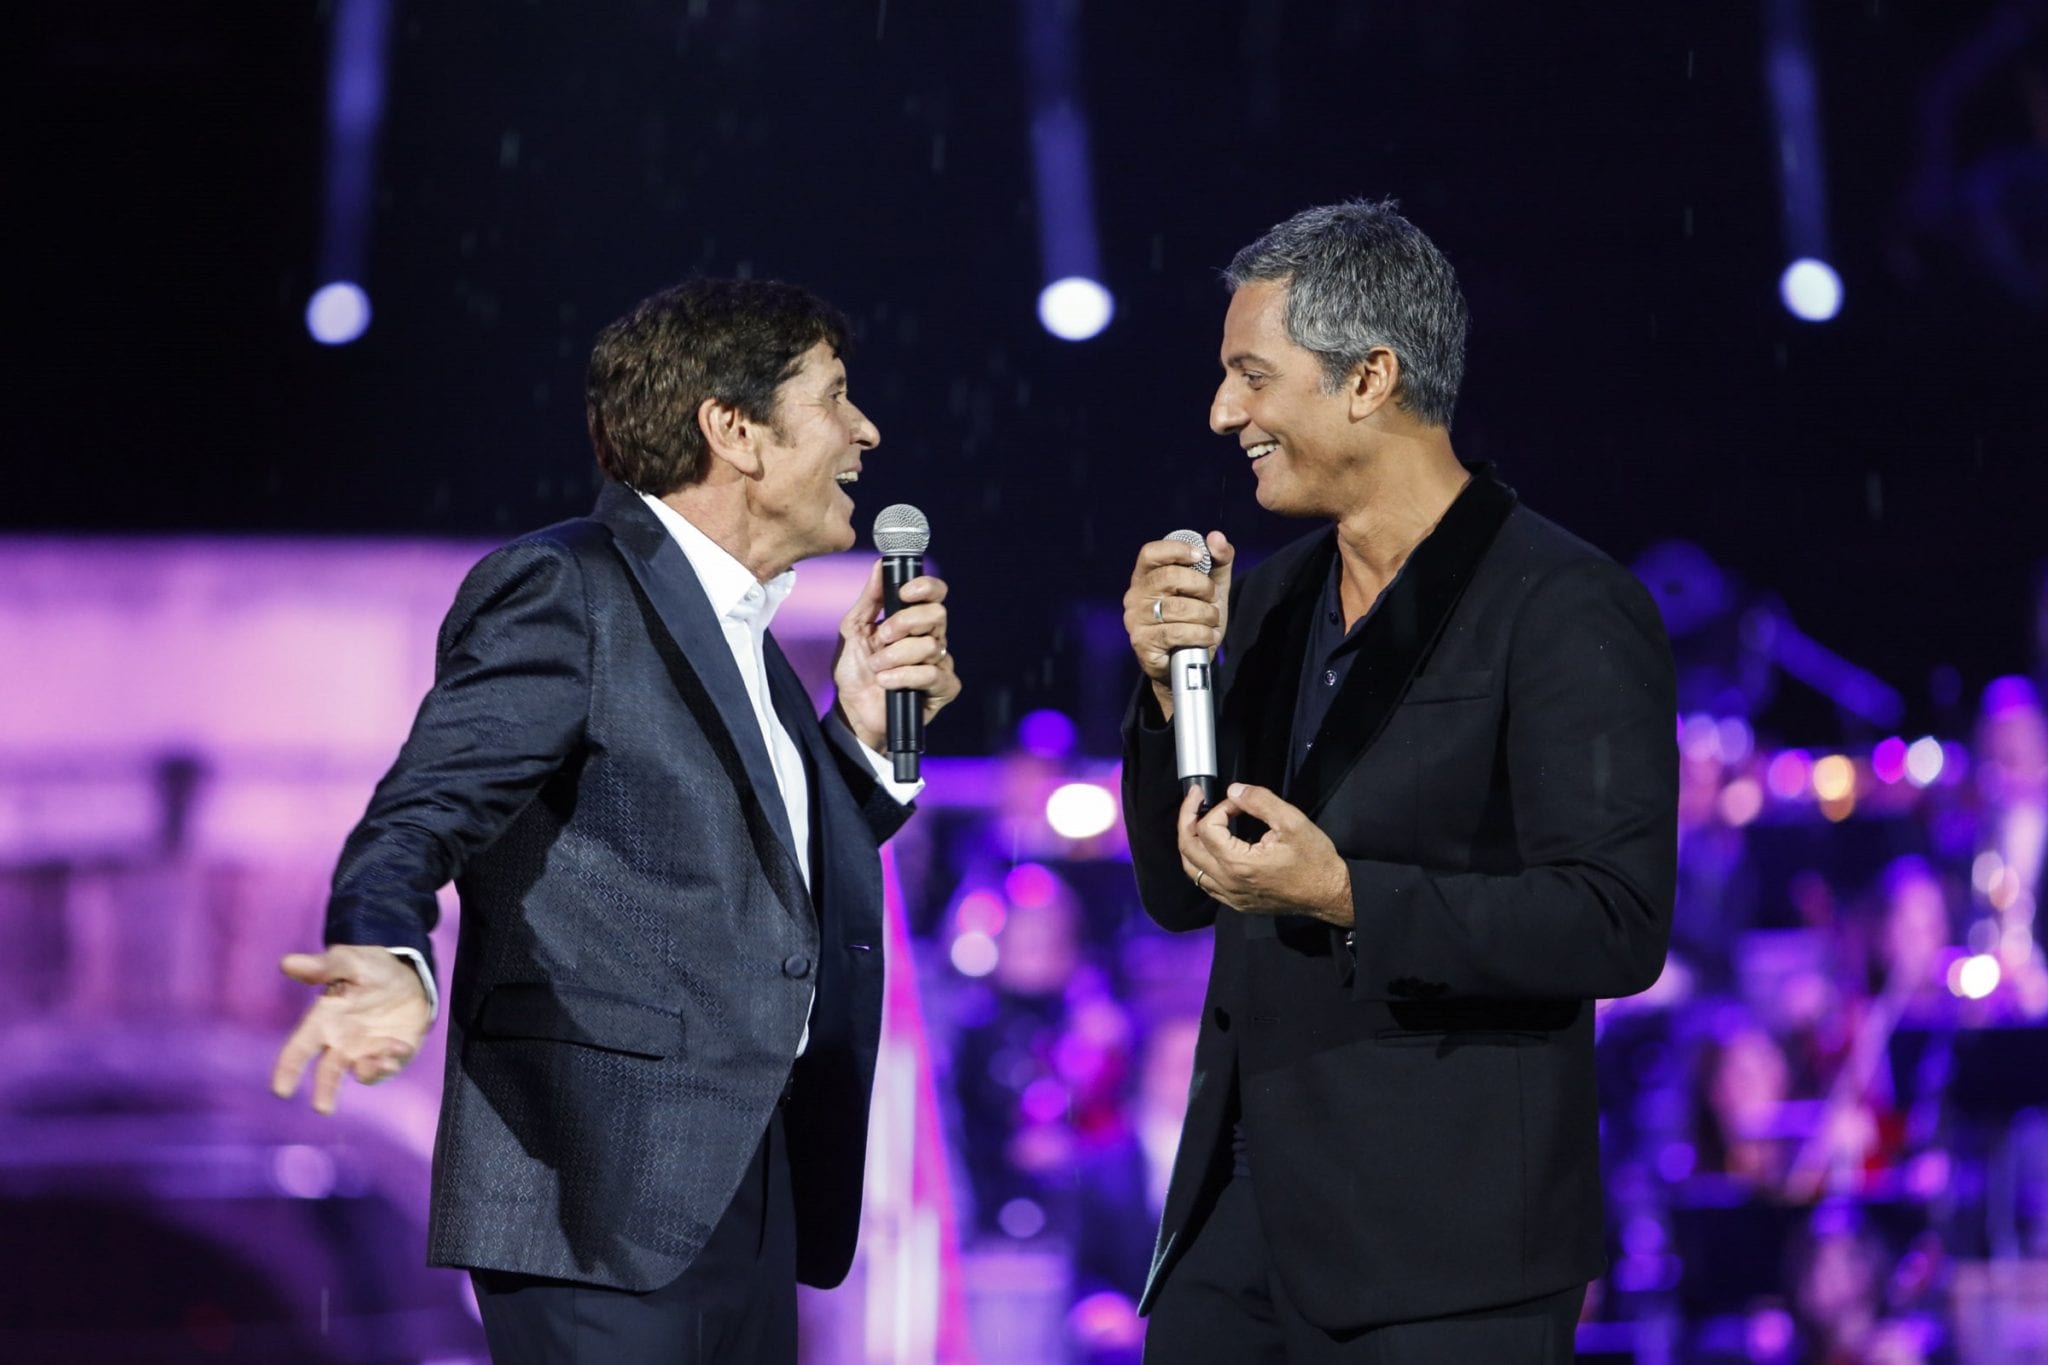 Live 29 agosto 2020: Gianni Morandi Live in Arena